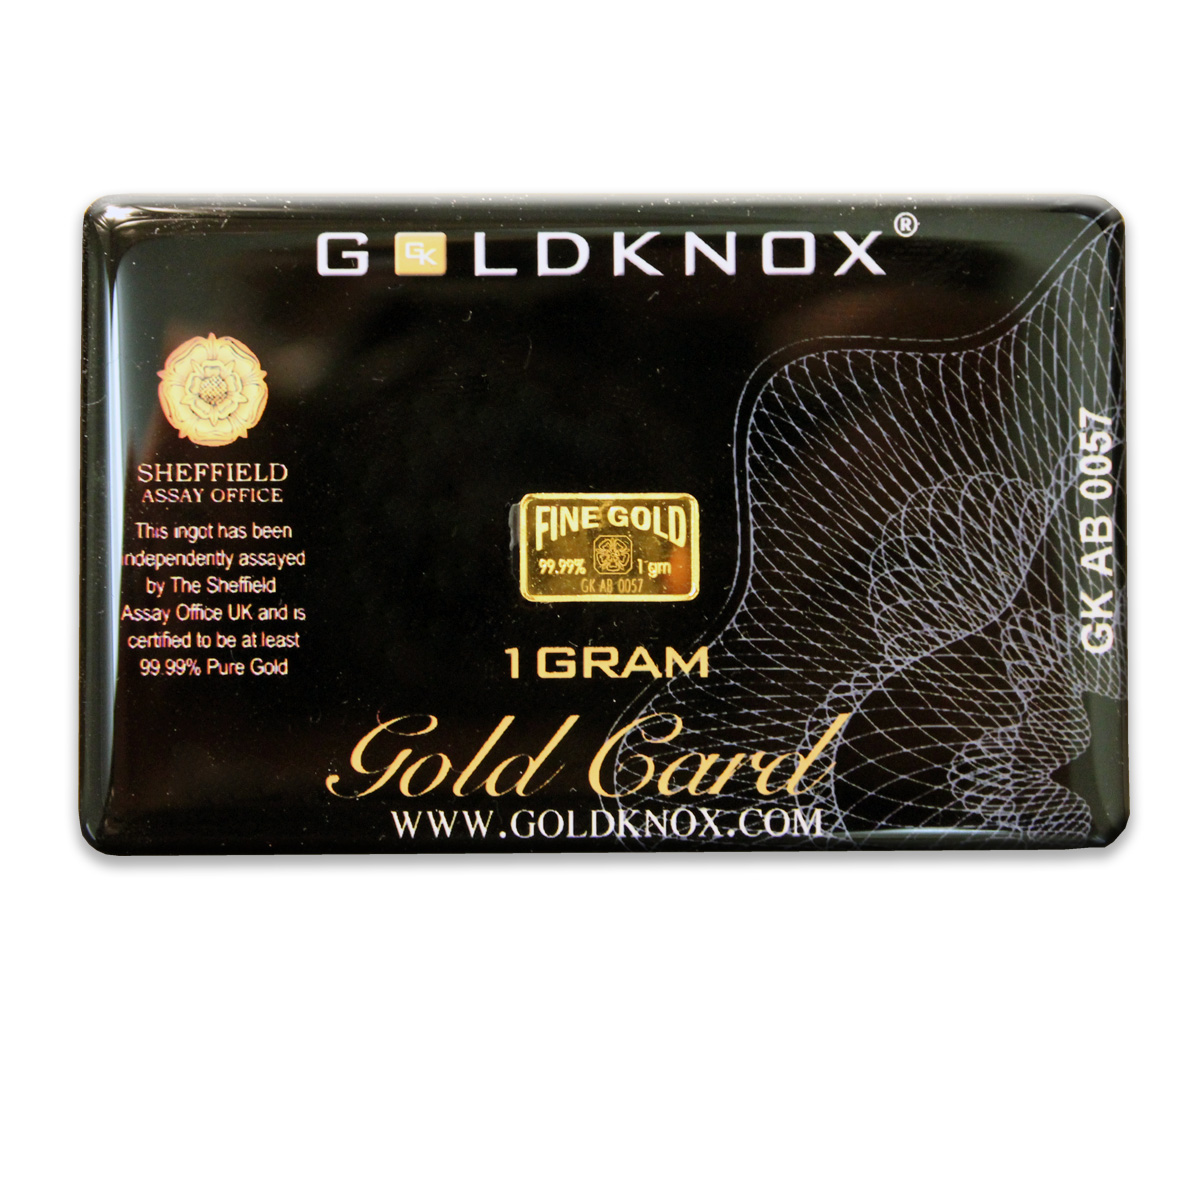 1 gram Goldknox Gold Card